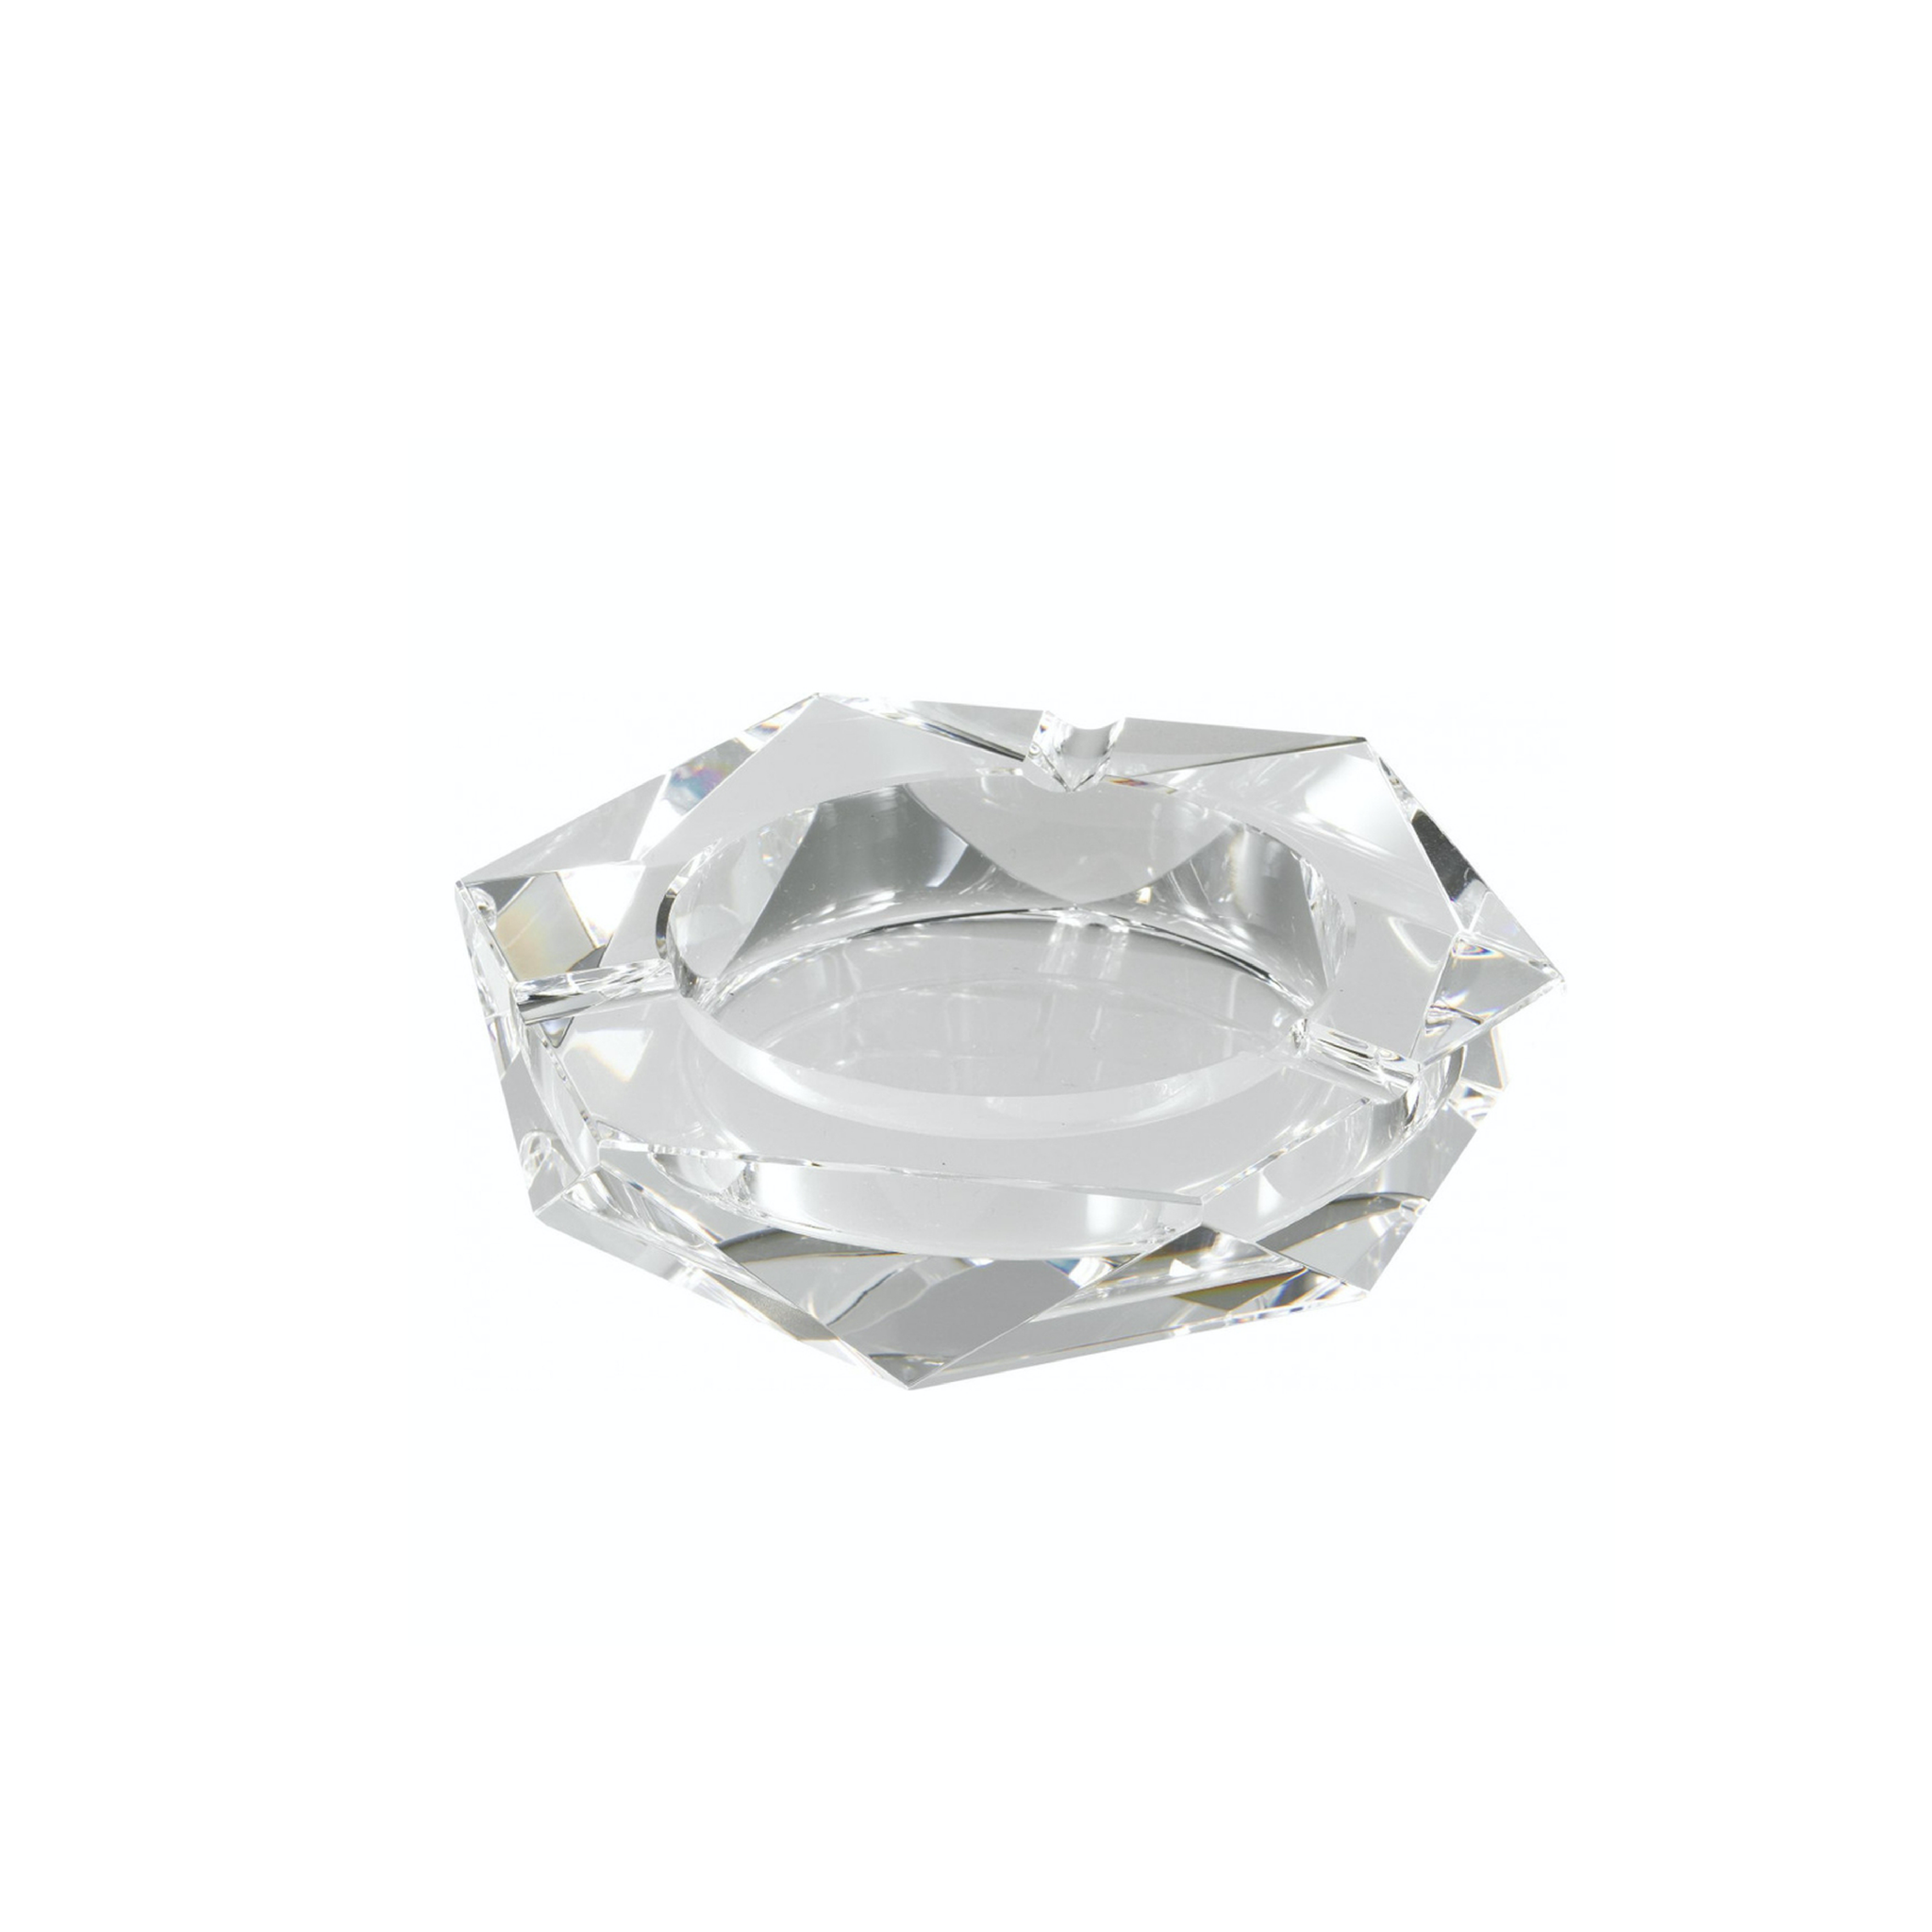 Glass Crystal Ashtray